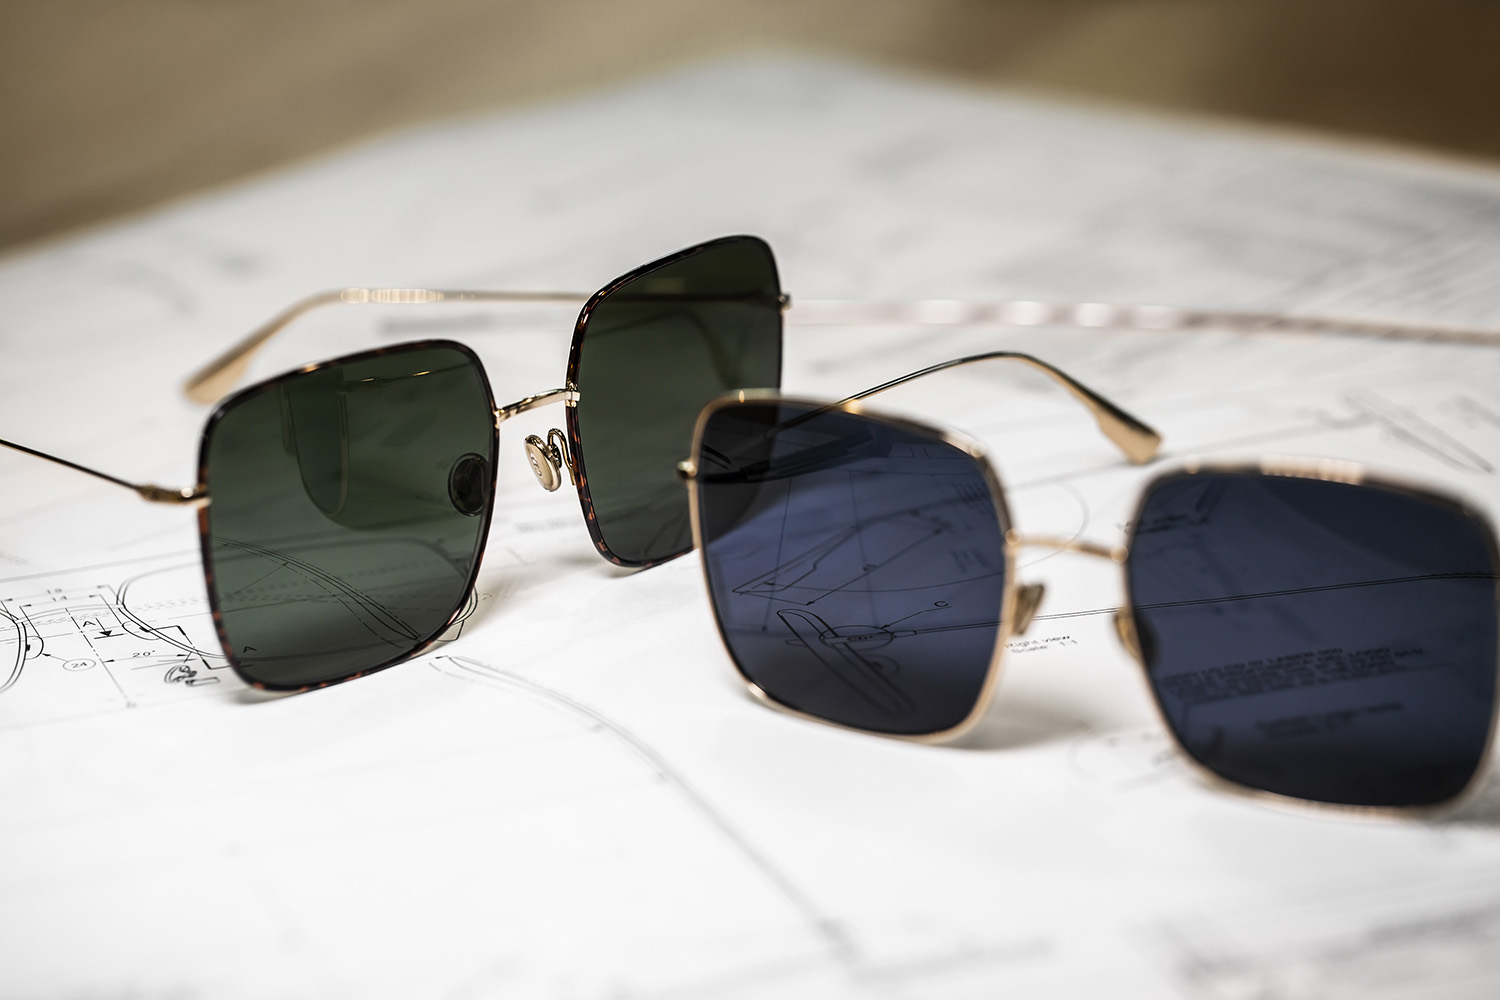 The Savoir-Faire of Dior sunglasses